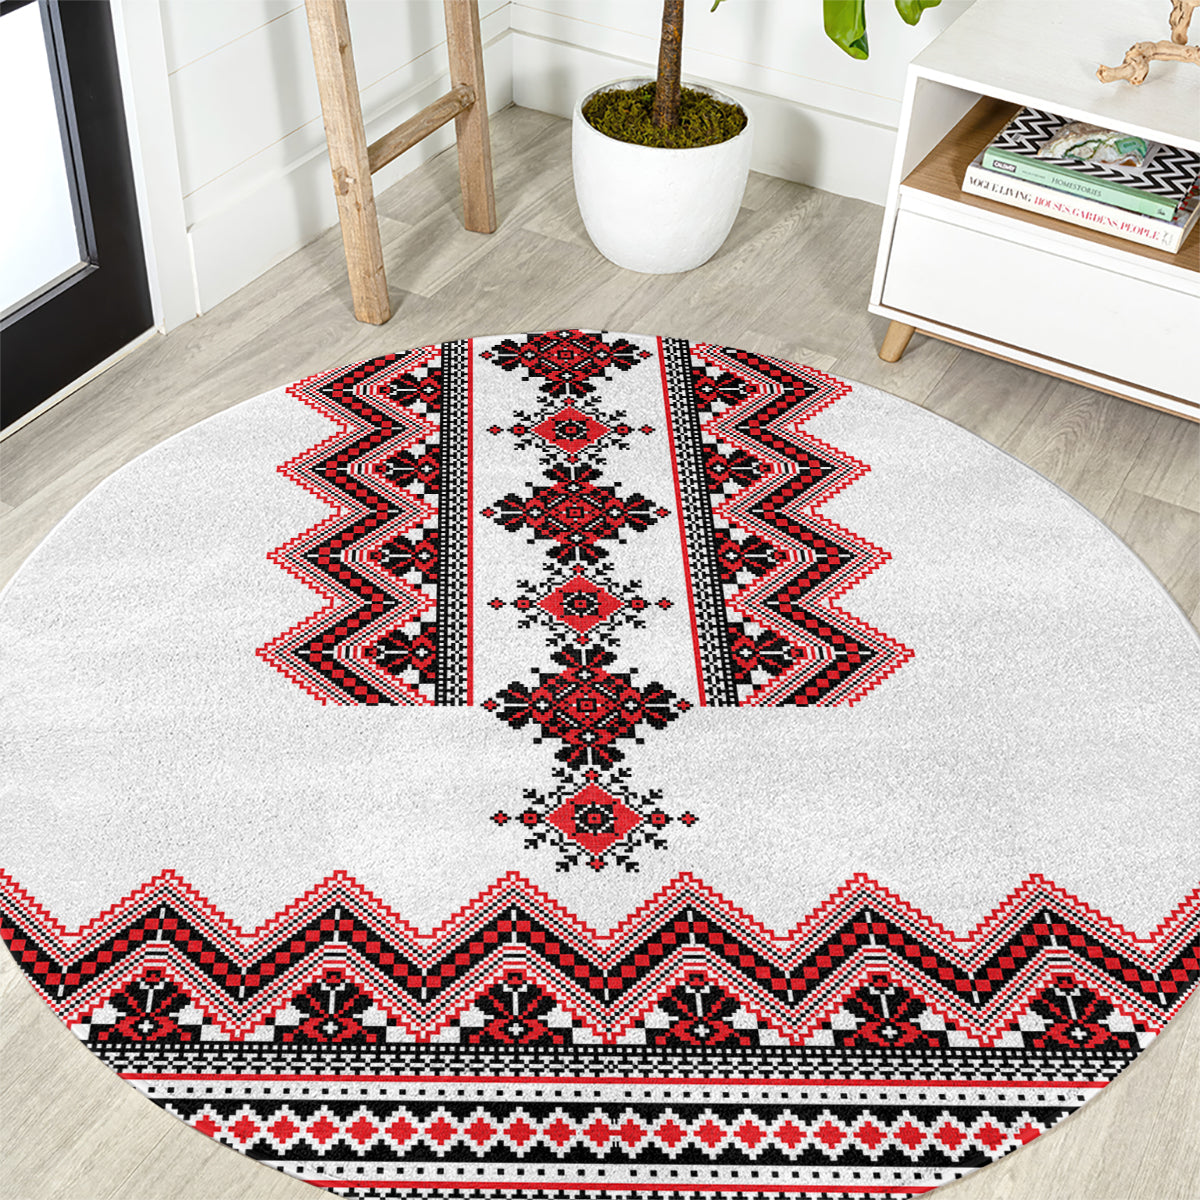 ukraine-folk-pattern-round-carpet-ukrainian-traditional-version